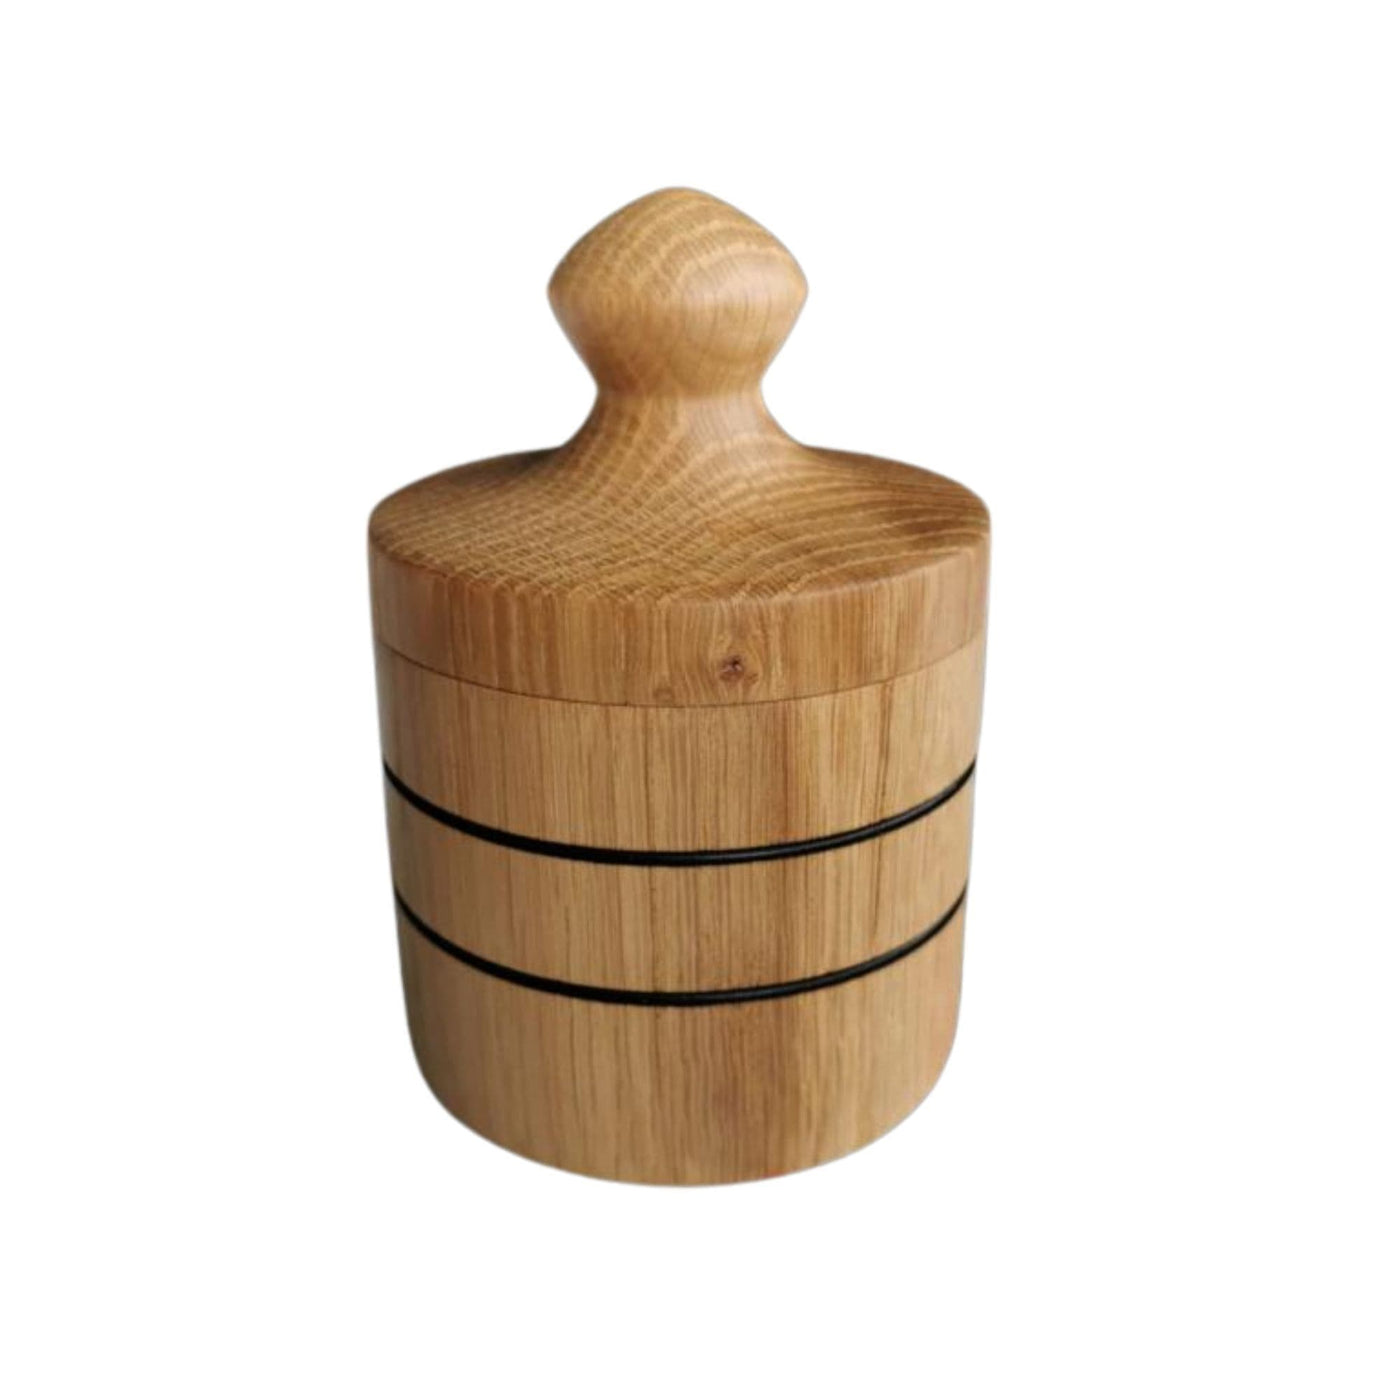 Clover Woodcraft Honey Pot Wood Turned Seasoning Pot